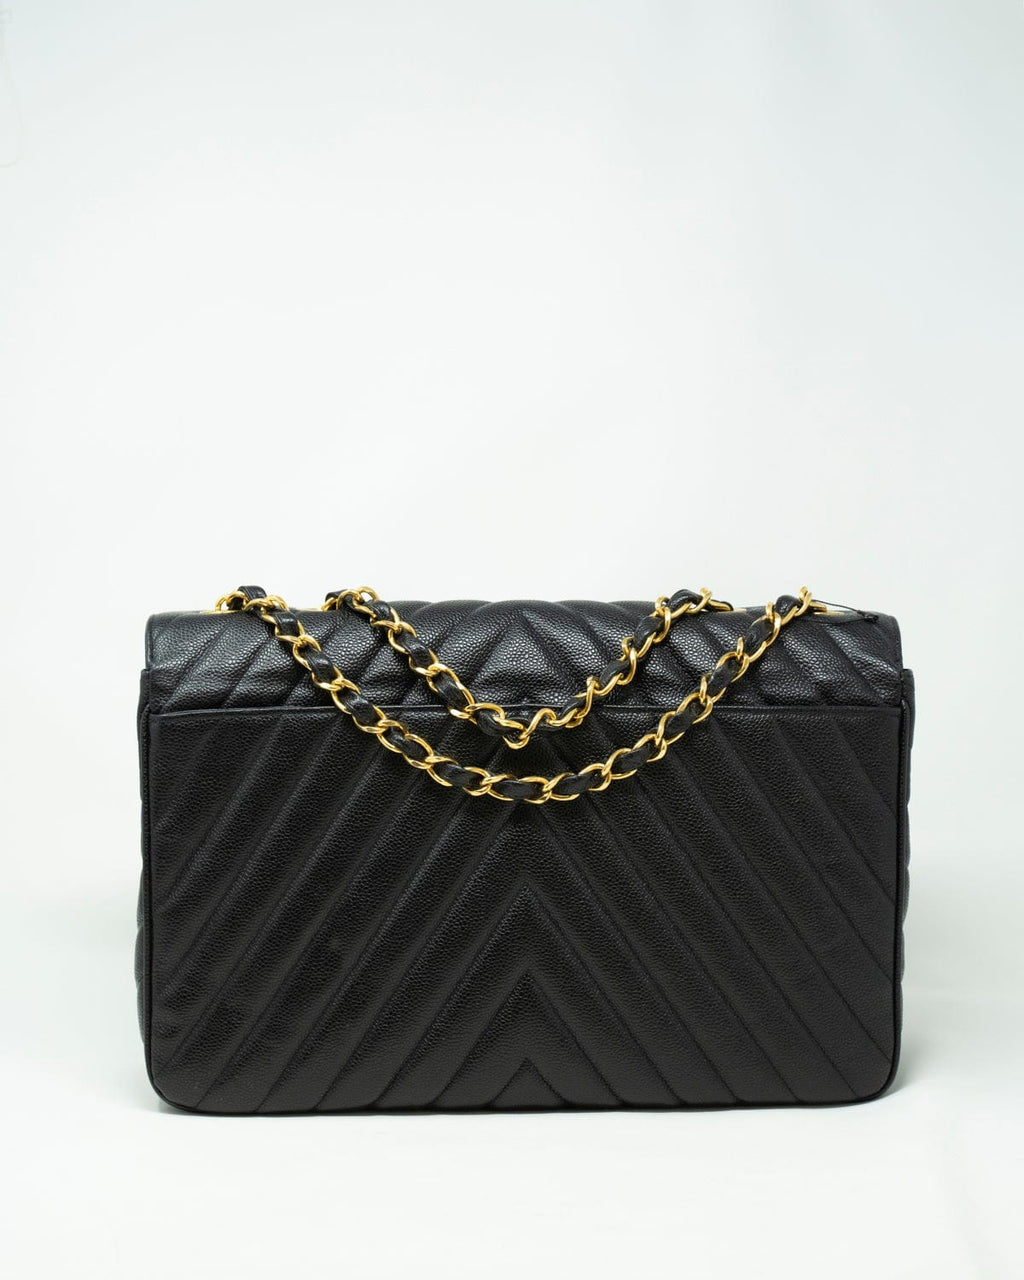 Sold at Auction: Chanel V Stitch CC Black Leather Flap Handbag